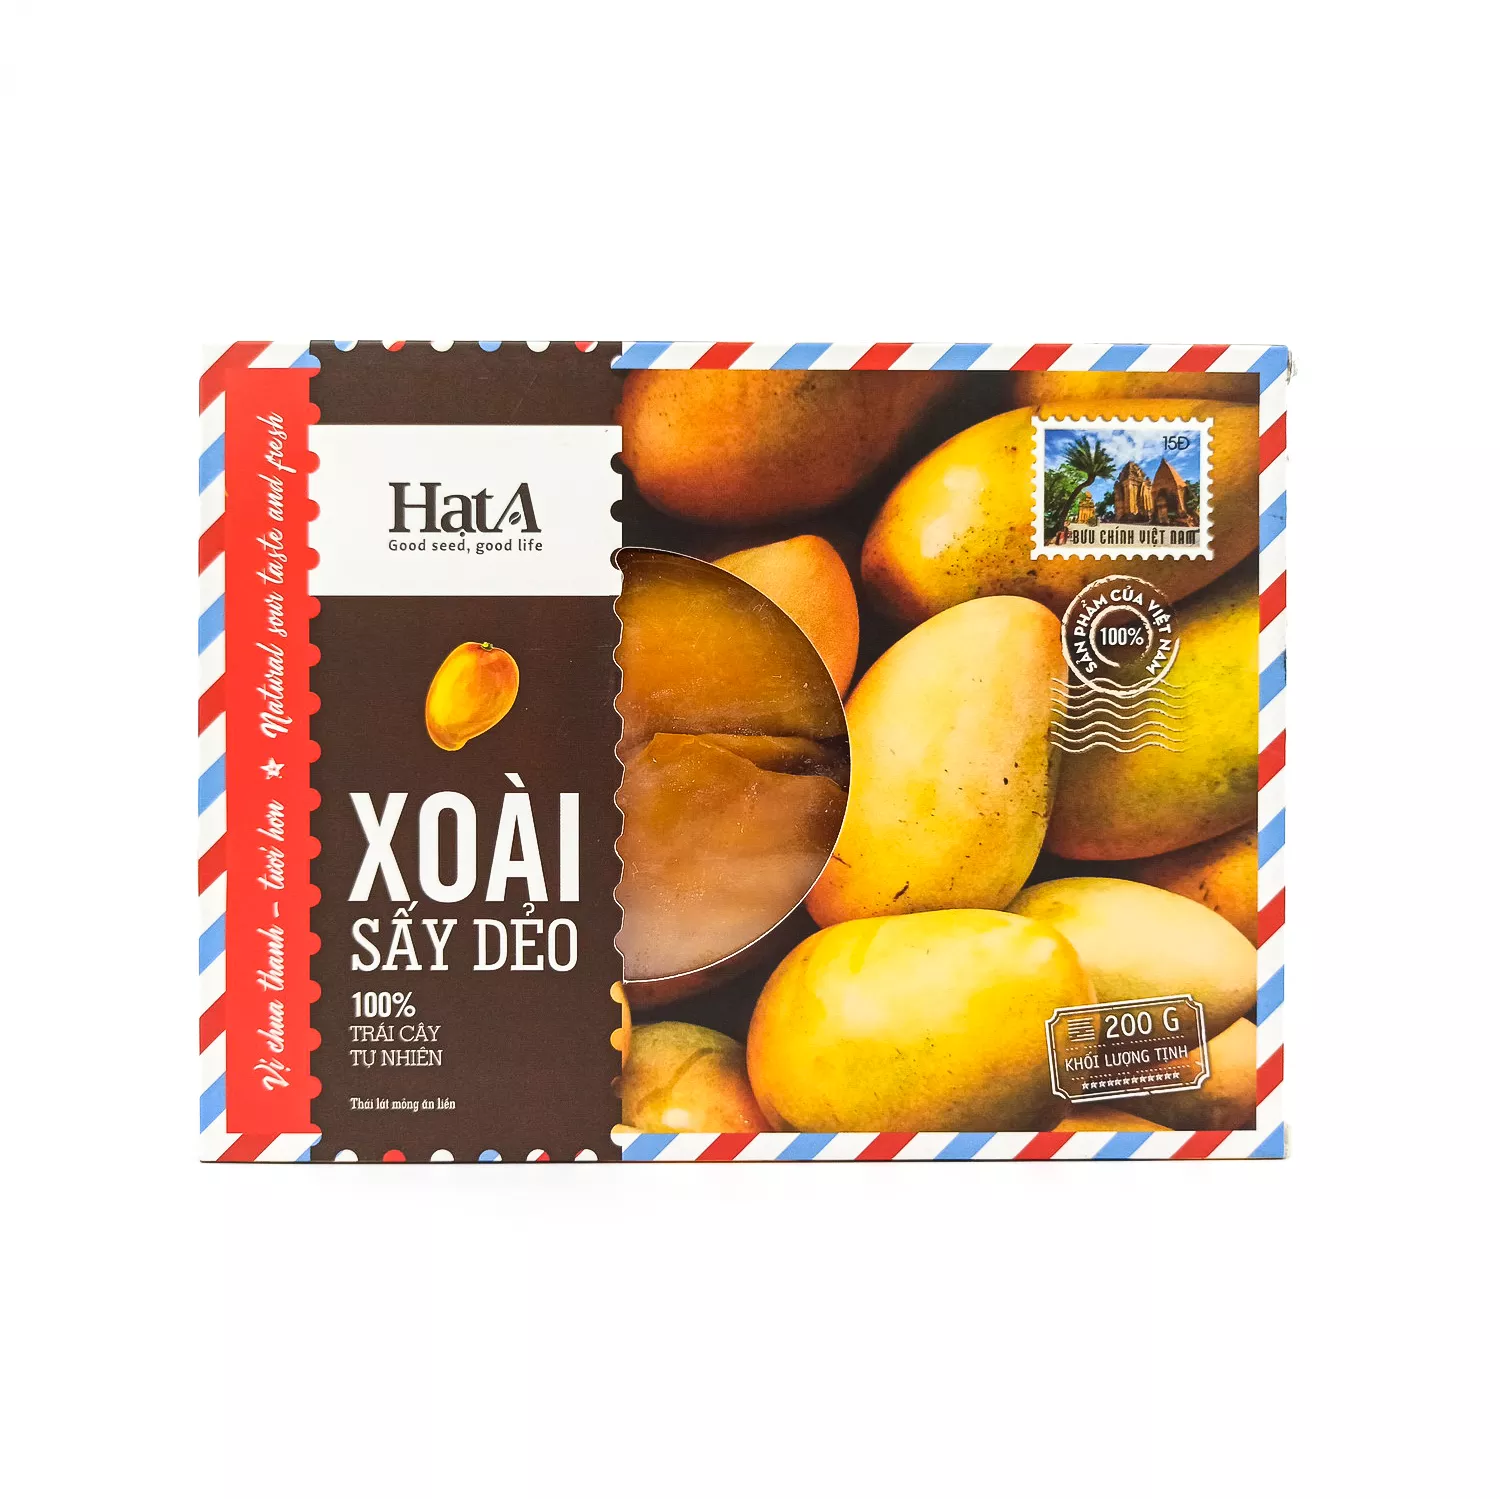 The High Quality Organic Dried Mango from Vietnam 200g